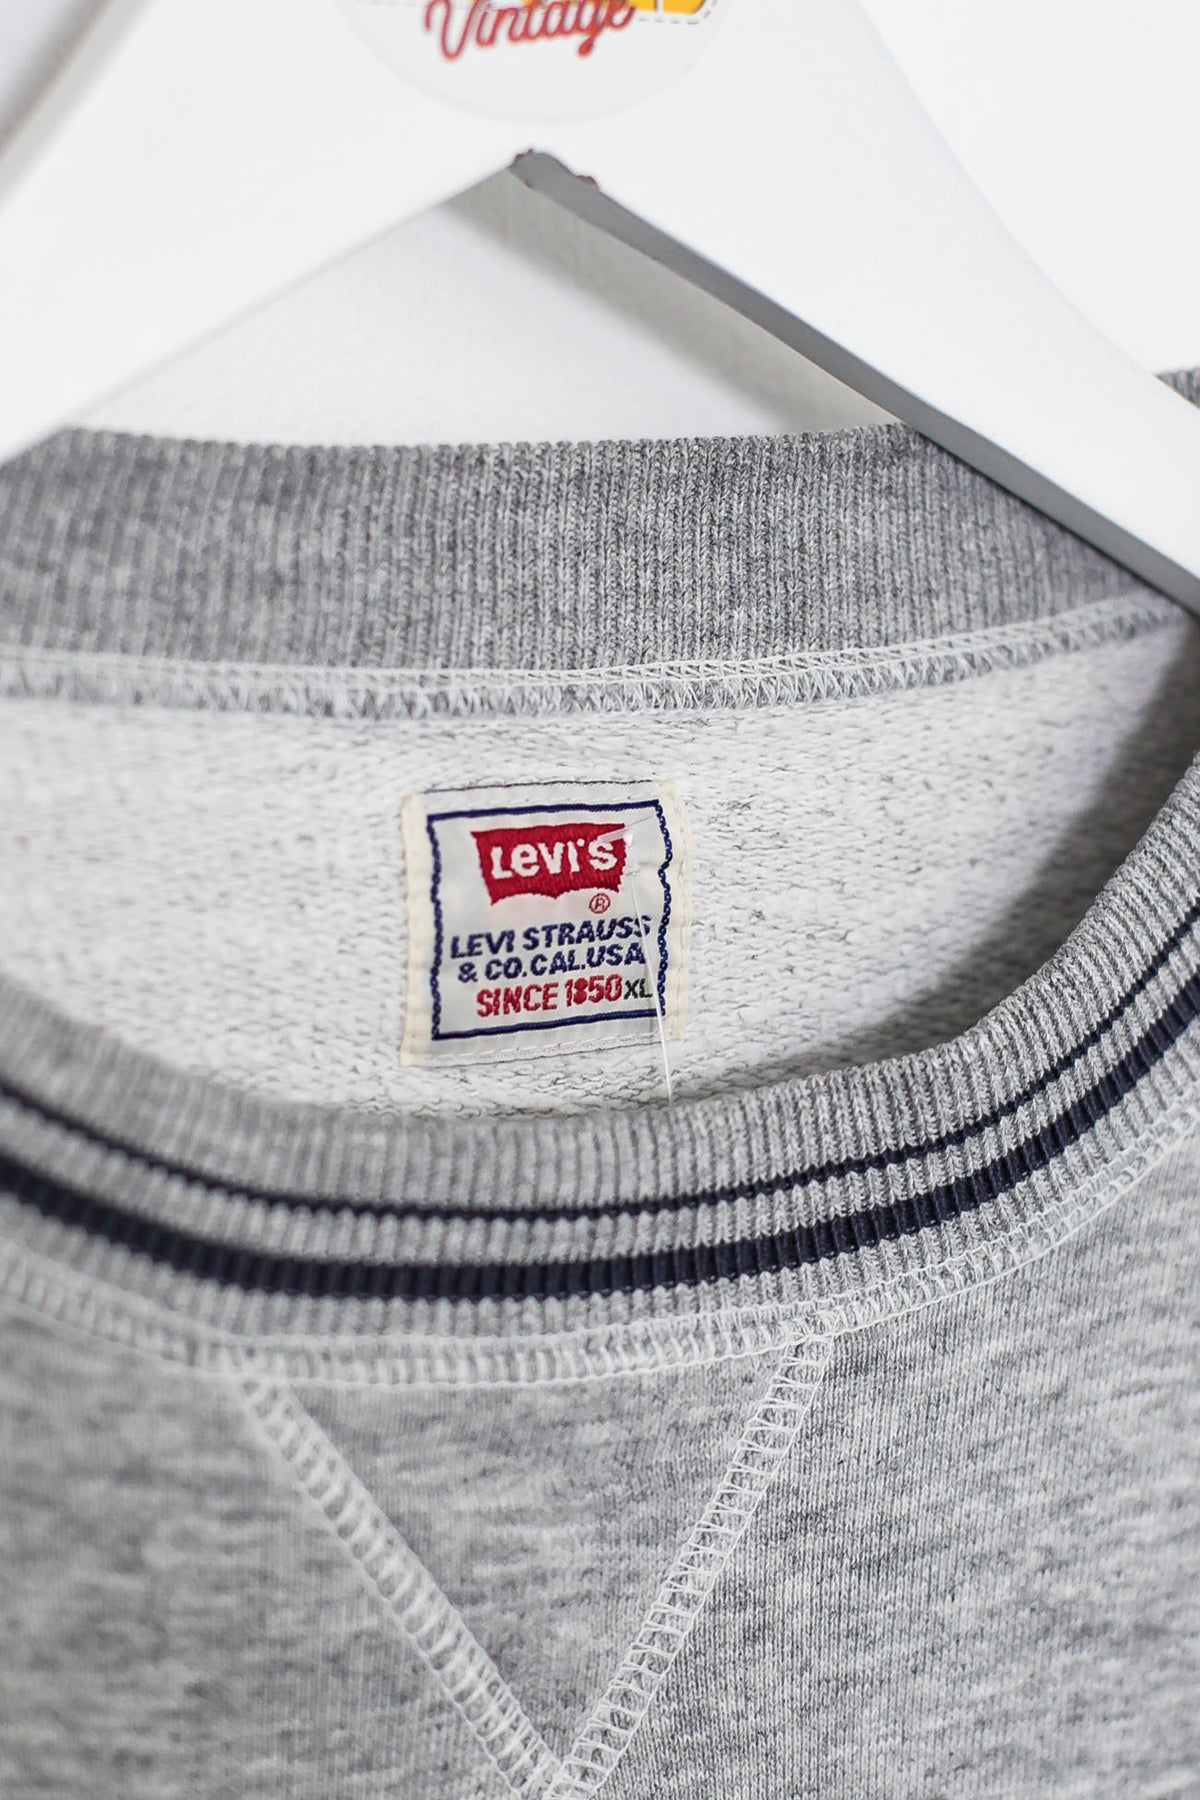 90s Levi's Sweatshirt (XL)